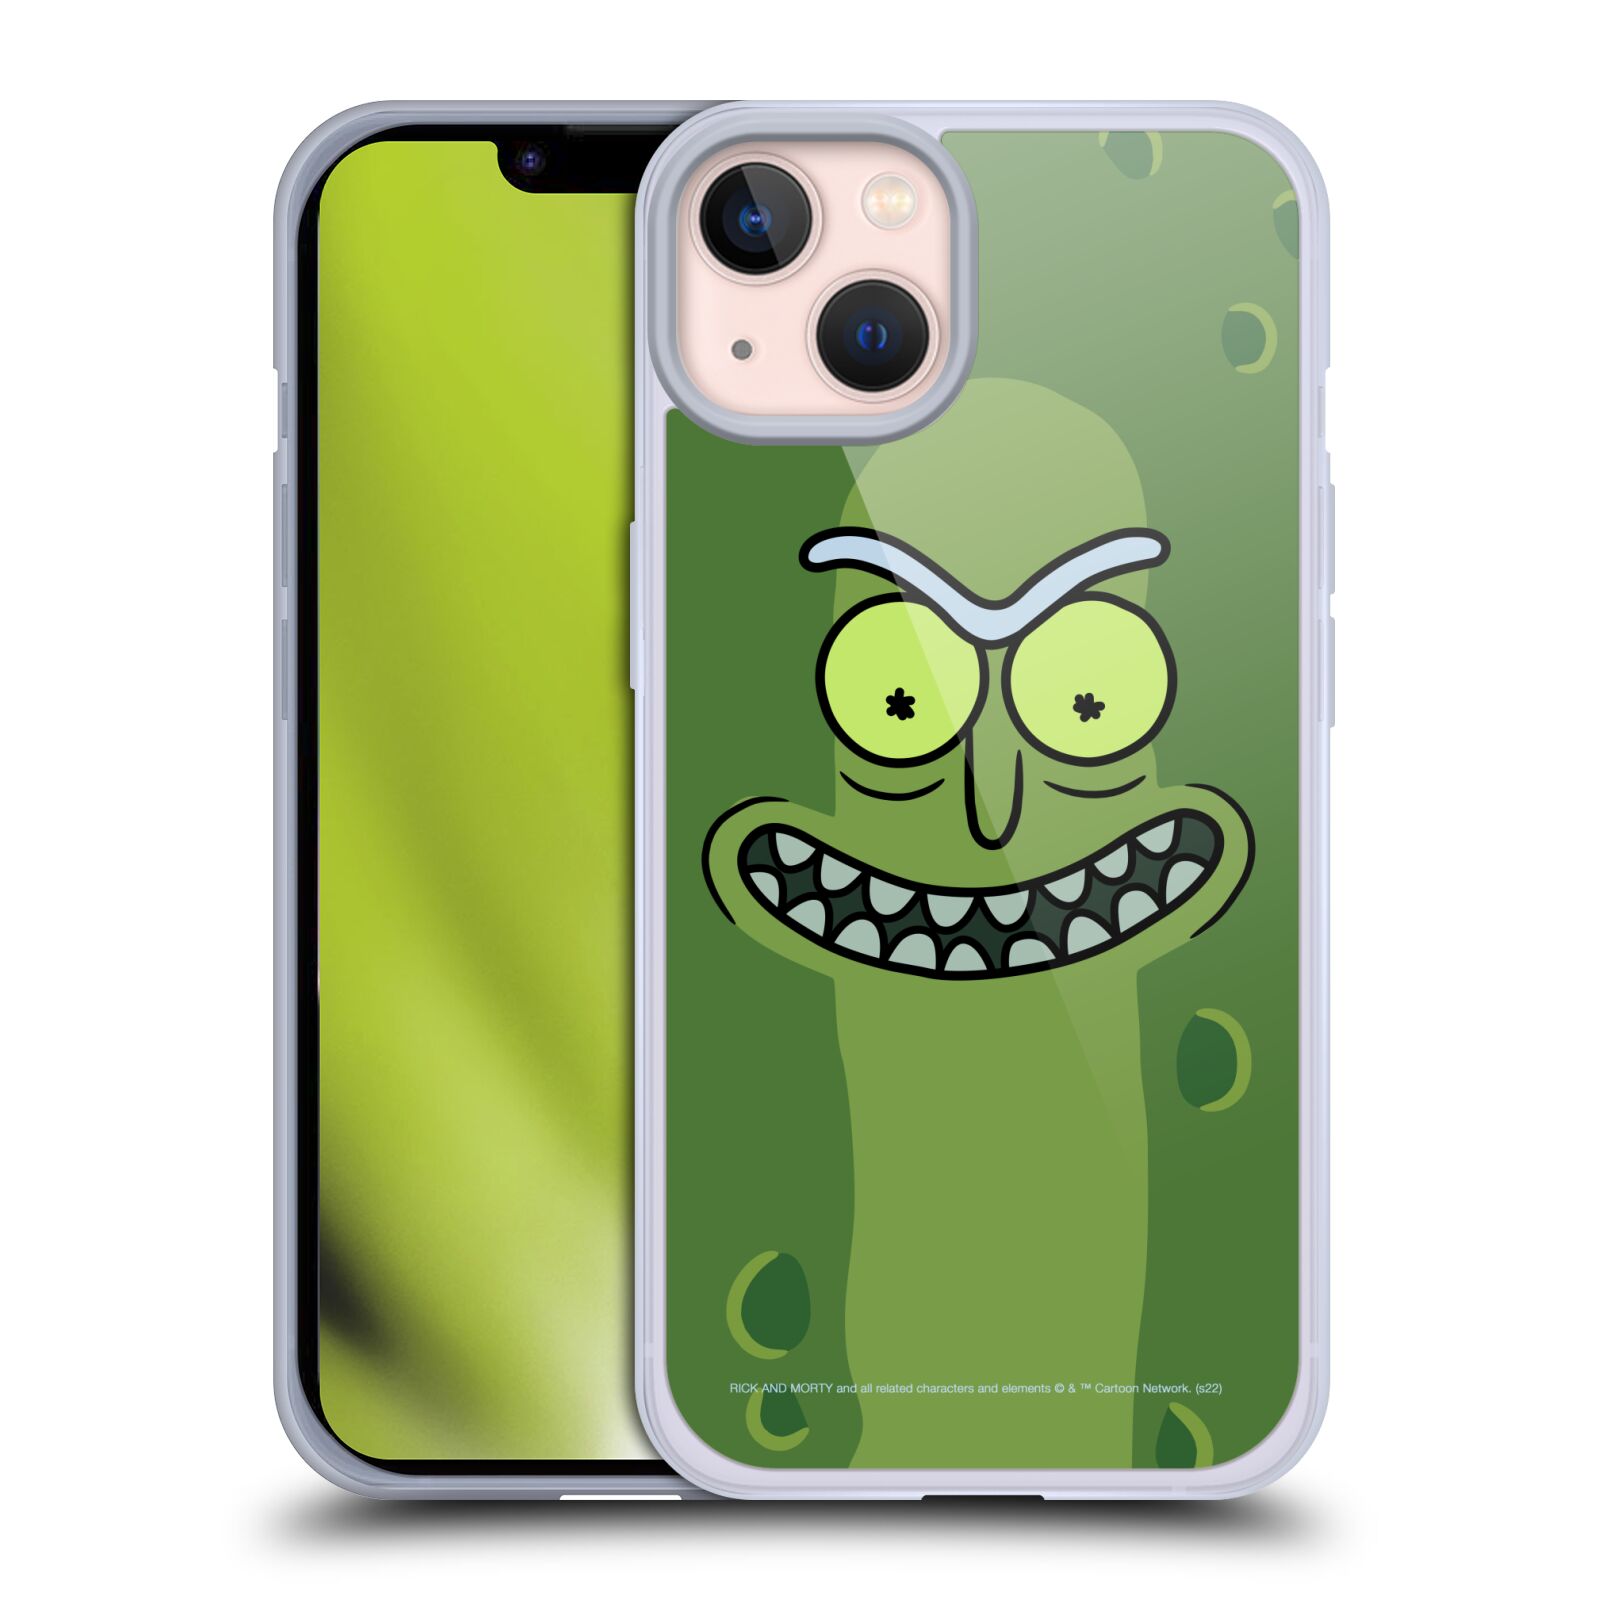 Silikonové pouzdro na mobil Apple iPhone 13 - Rick And Morty - Pickle Rick (Silikonový kryt, obal, pouzdro na mobilní telefon Apple iPhone 13 s licencovaným motivem Rick And Morty - Pickle Rick)